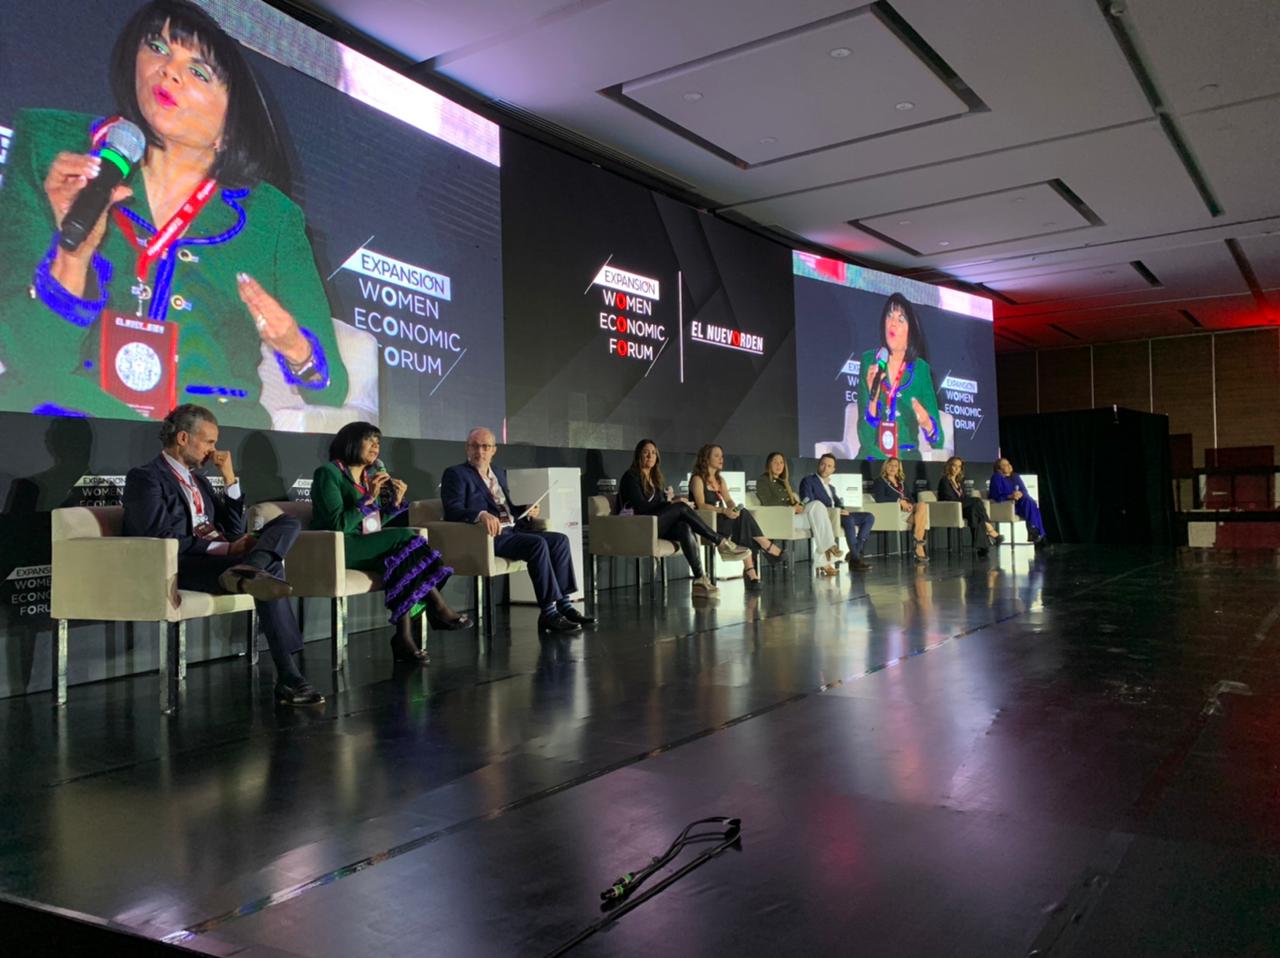 Expansión Women Economic Forum 2022